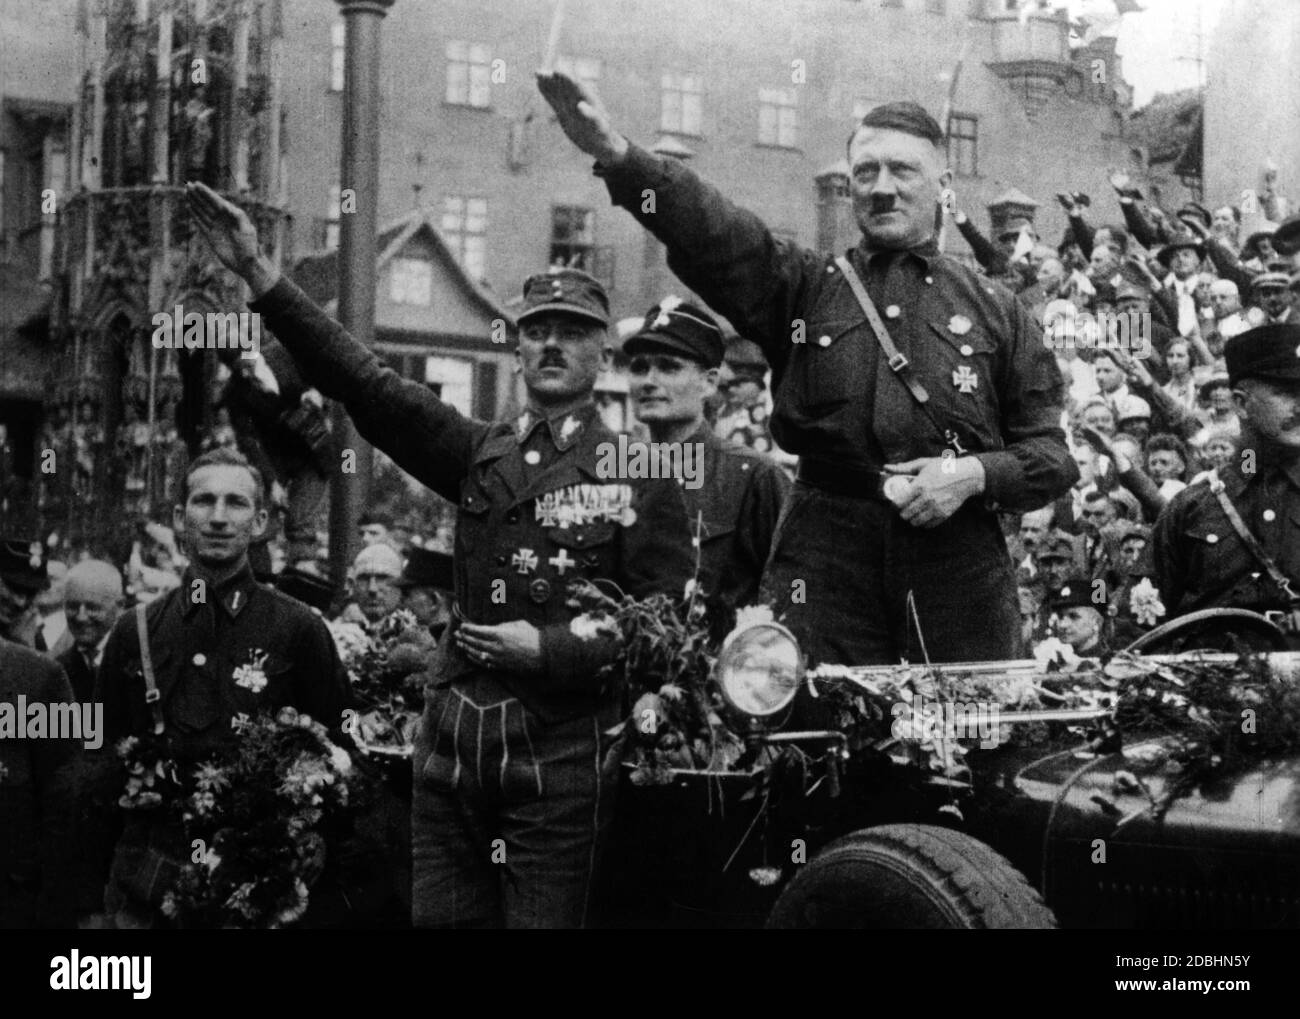 Left to right: Franz Pfeffer von Salomon (soon only von Pfeffer), Rudolf  Hess, Adolf Hitler and Uli Graf during the Nazi Party Congress in Nuremberg  on the Main Market Square. In the